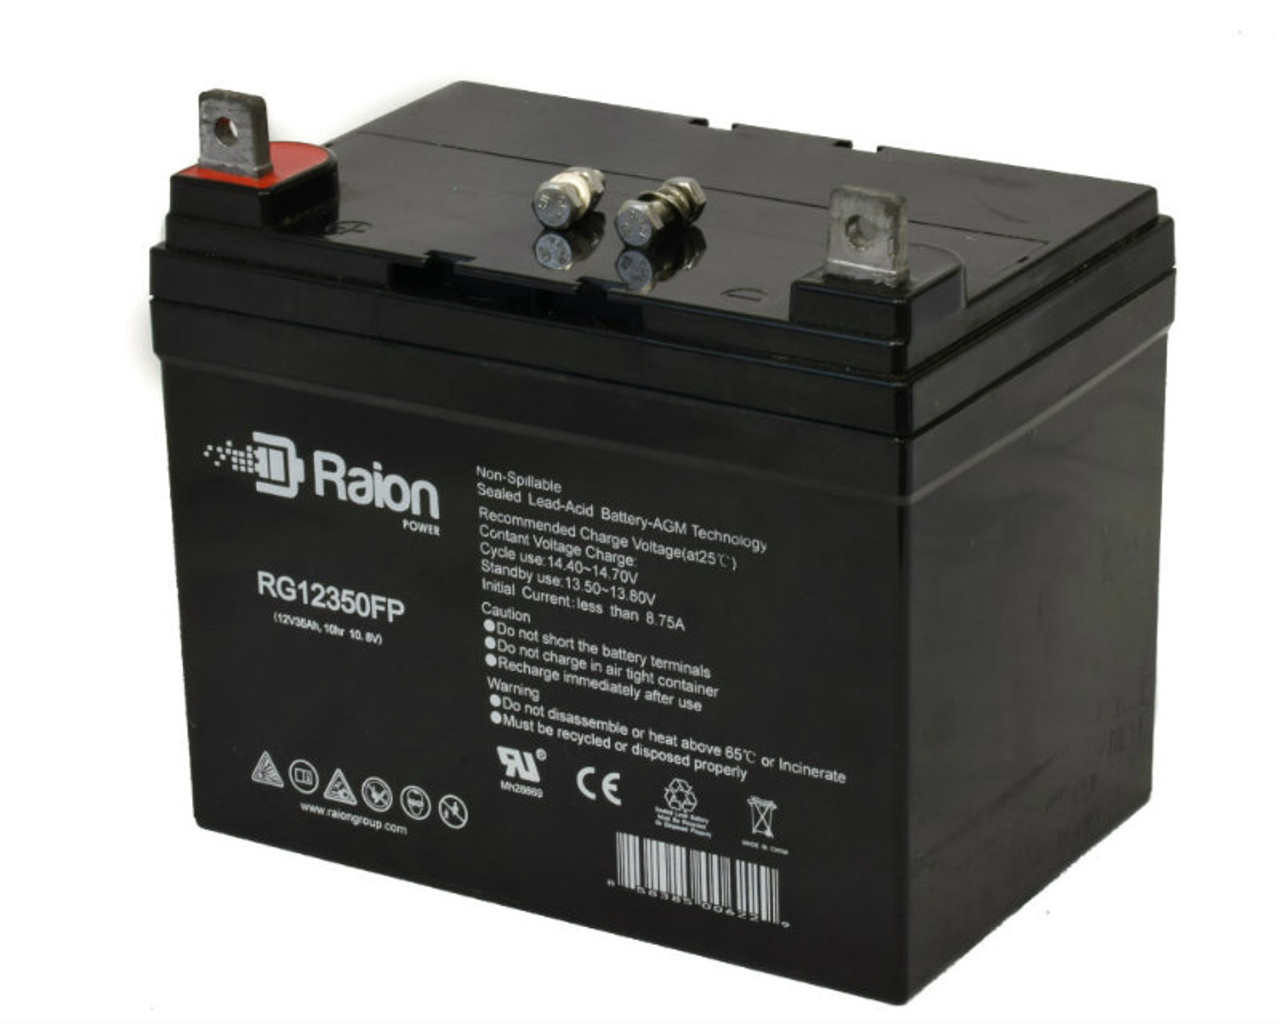 Raion Power Replacement 12V 35Ah RG12350FP Battery for Agco Allis 1614HV